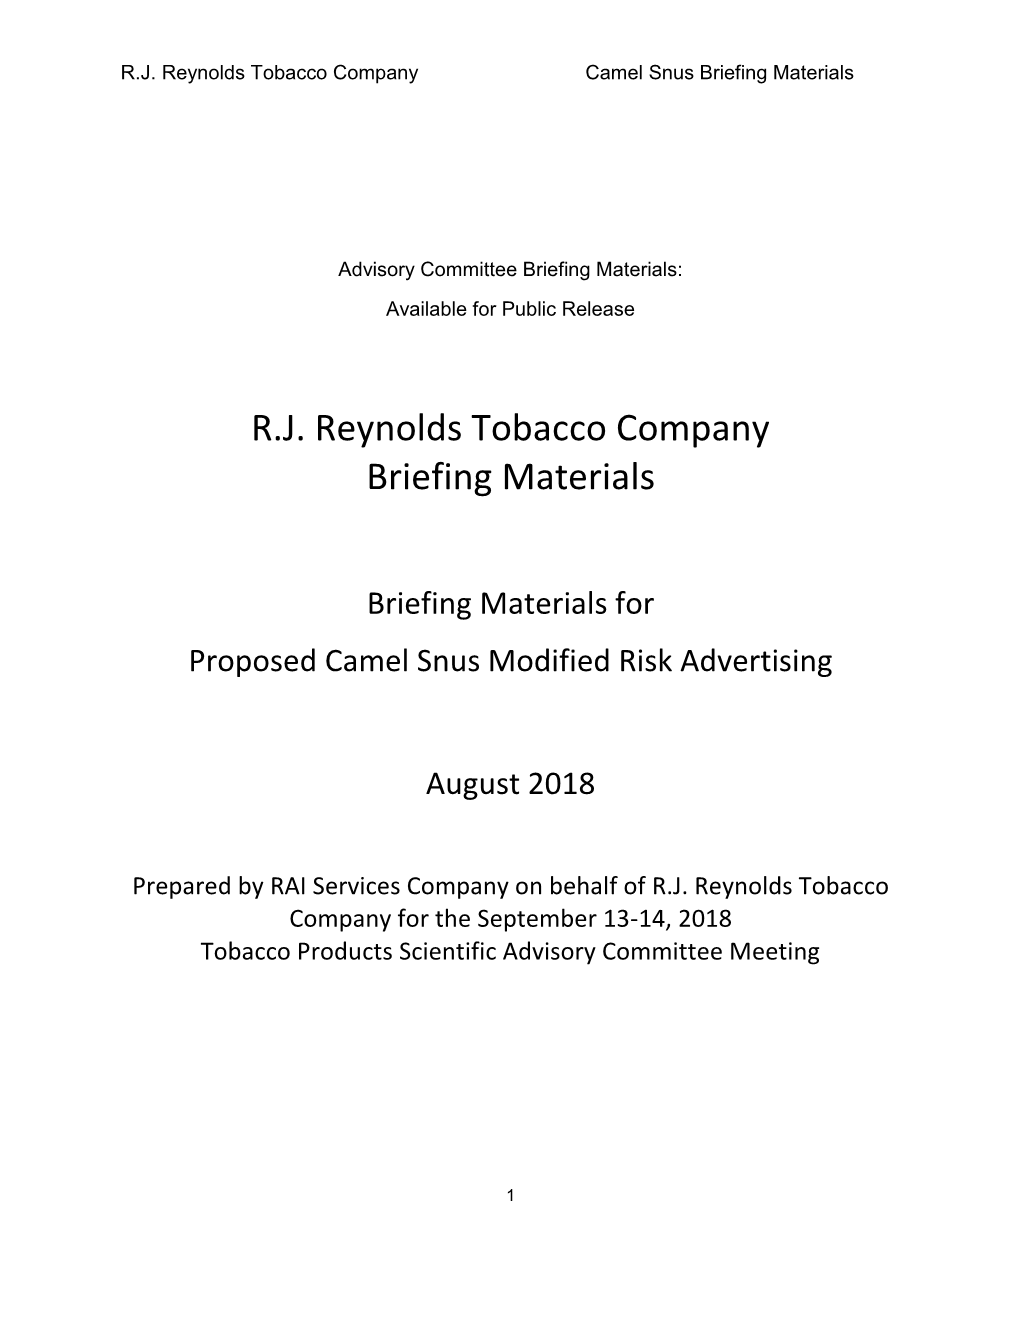 R.J. Reynolds Tobacco Company Briefing Materials